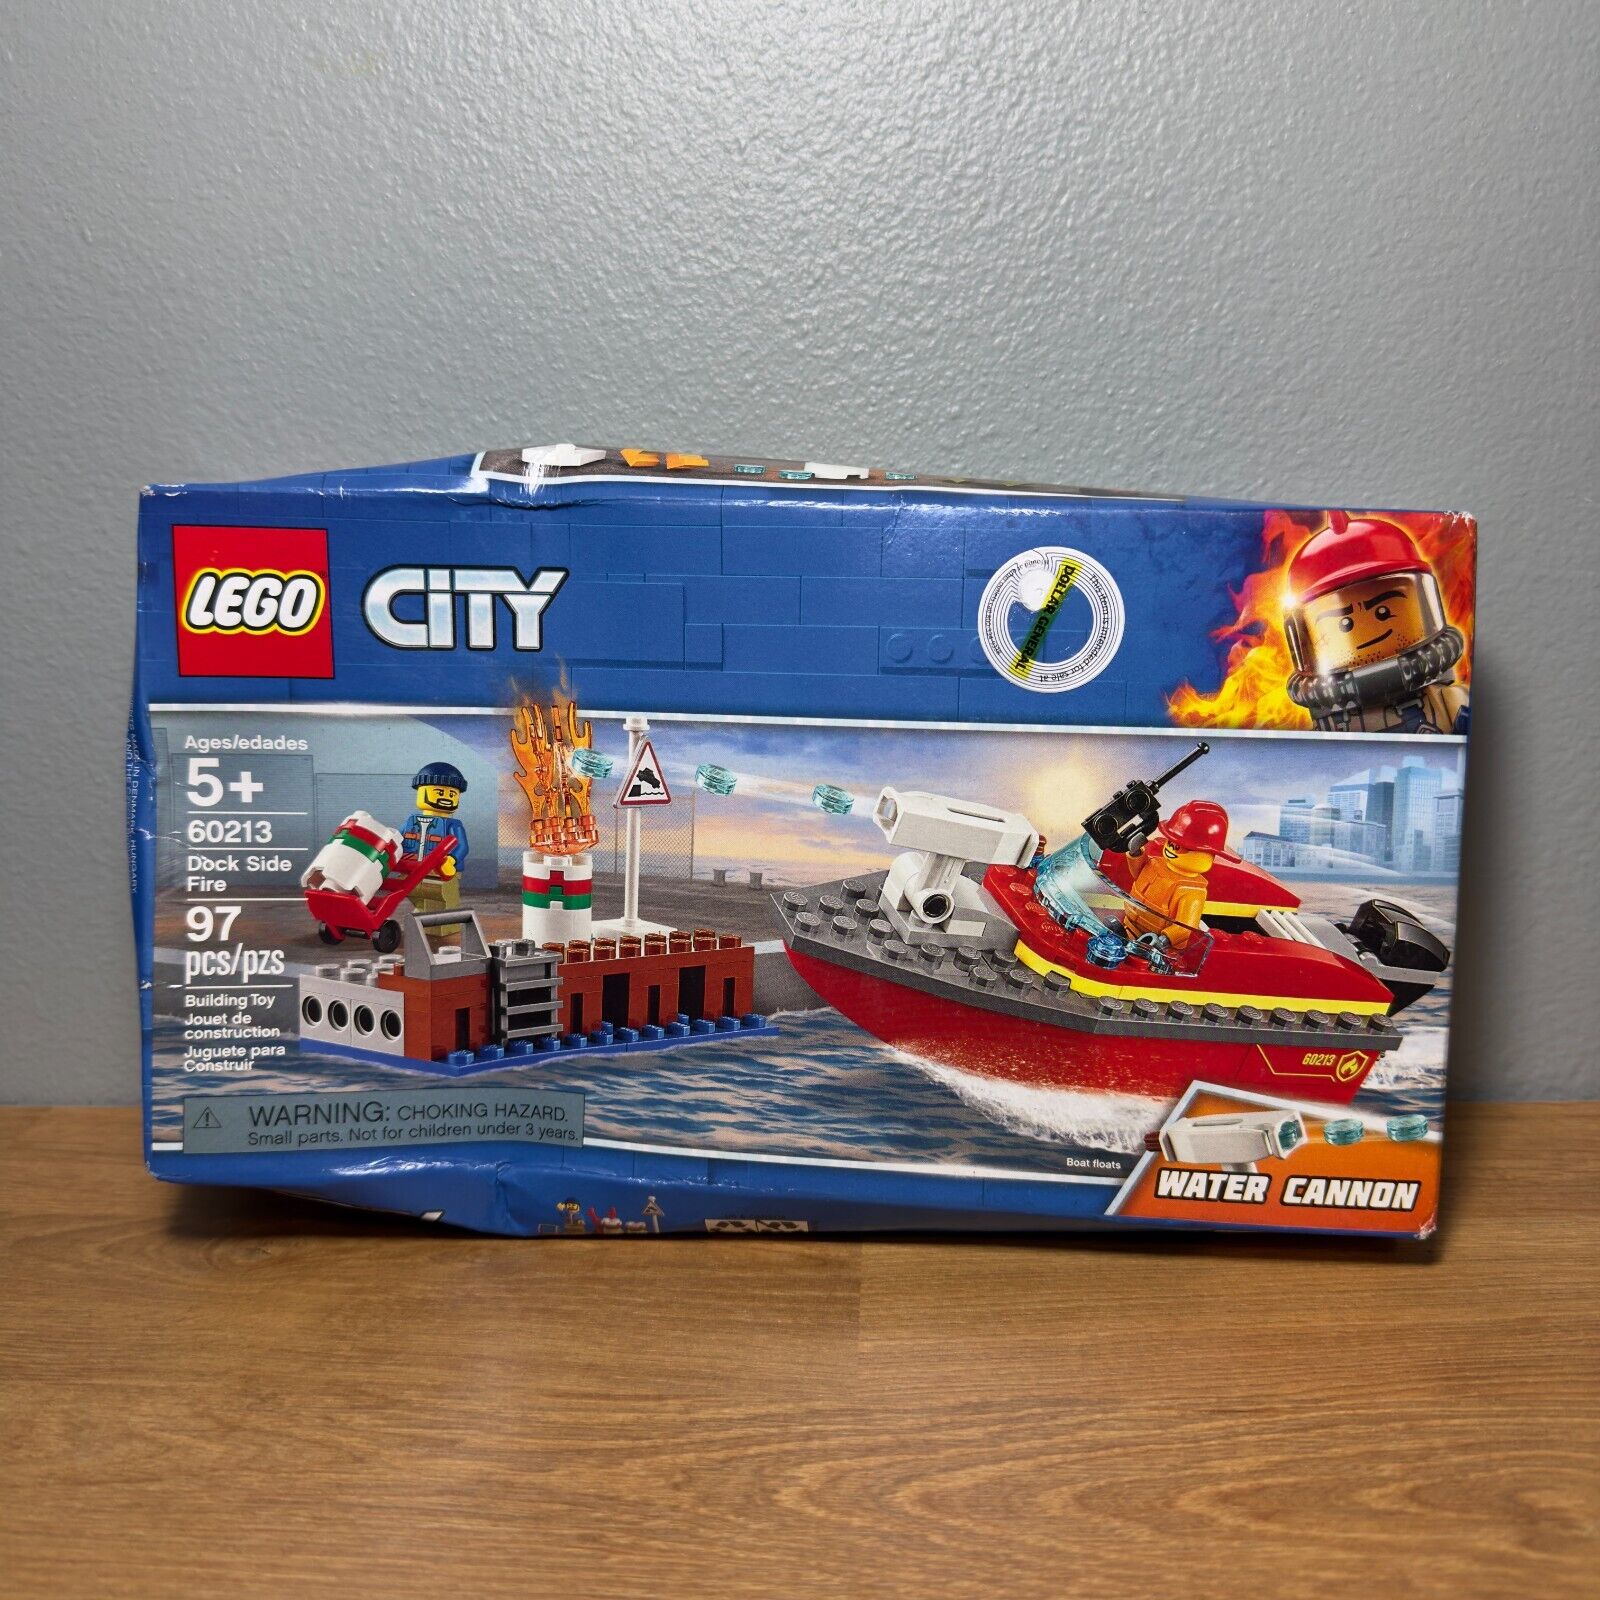 Lego City Dock Side Fire 60213 NEW Sealed - 97 pcs Set